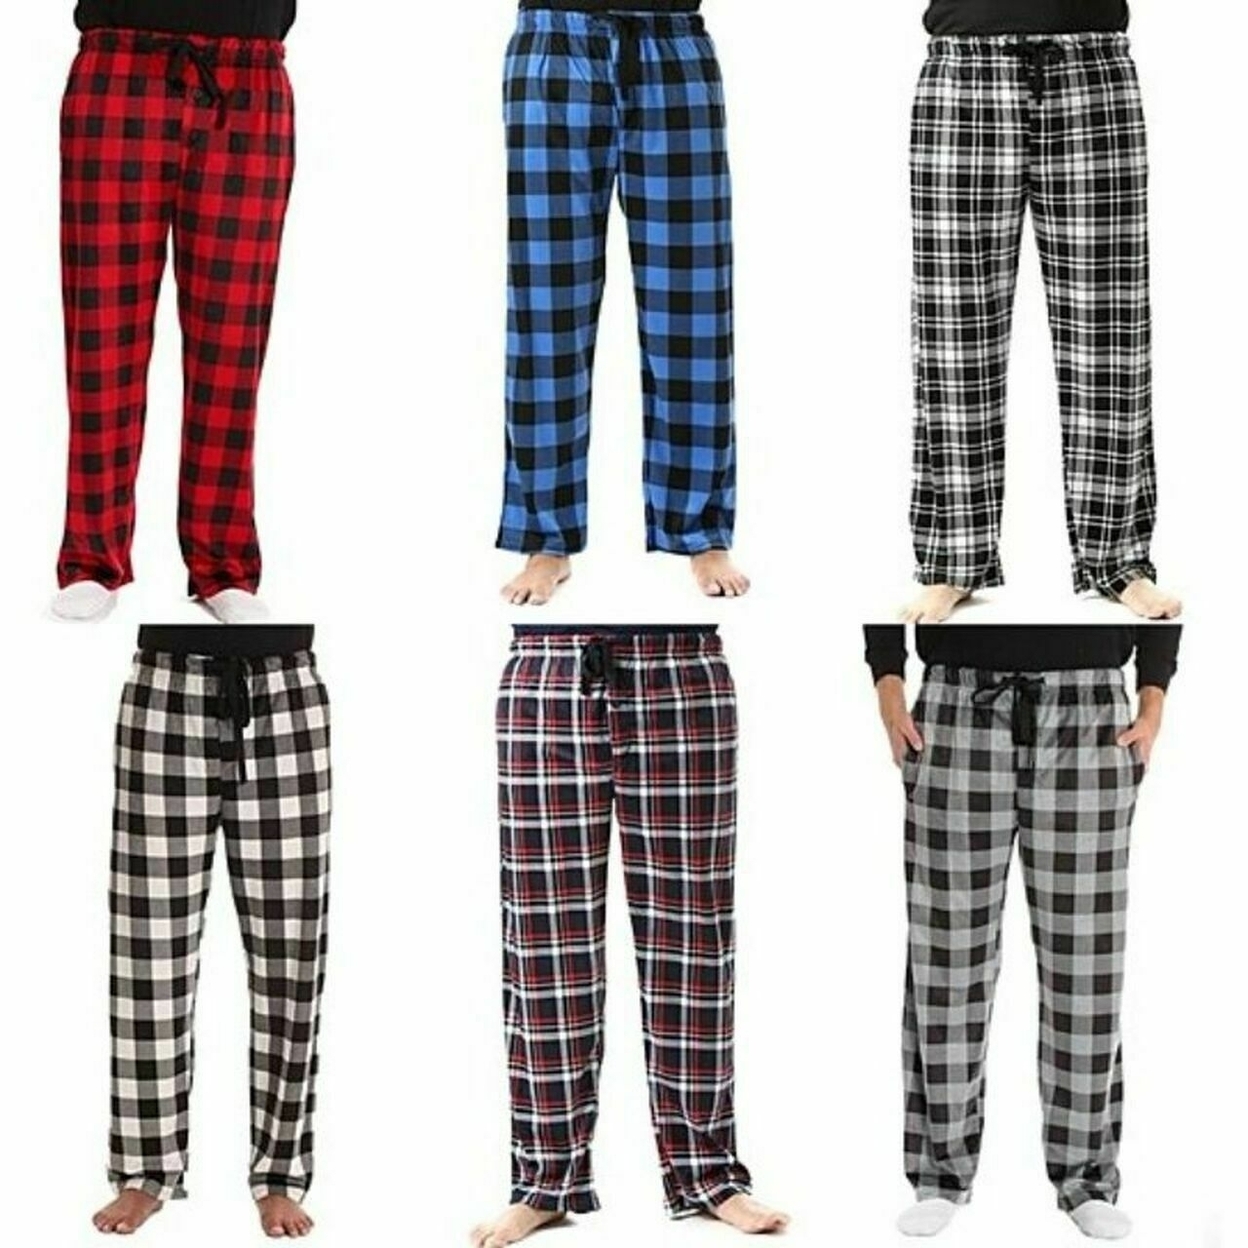 2-Pack: Men's Ultra Soft Cozy Flannel Fleece Plaid Pajama Sleep Bottom Lounge Pants - Black & Black, Medium